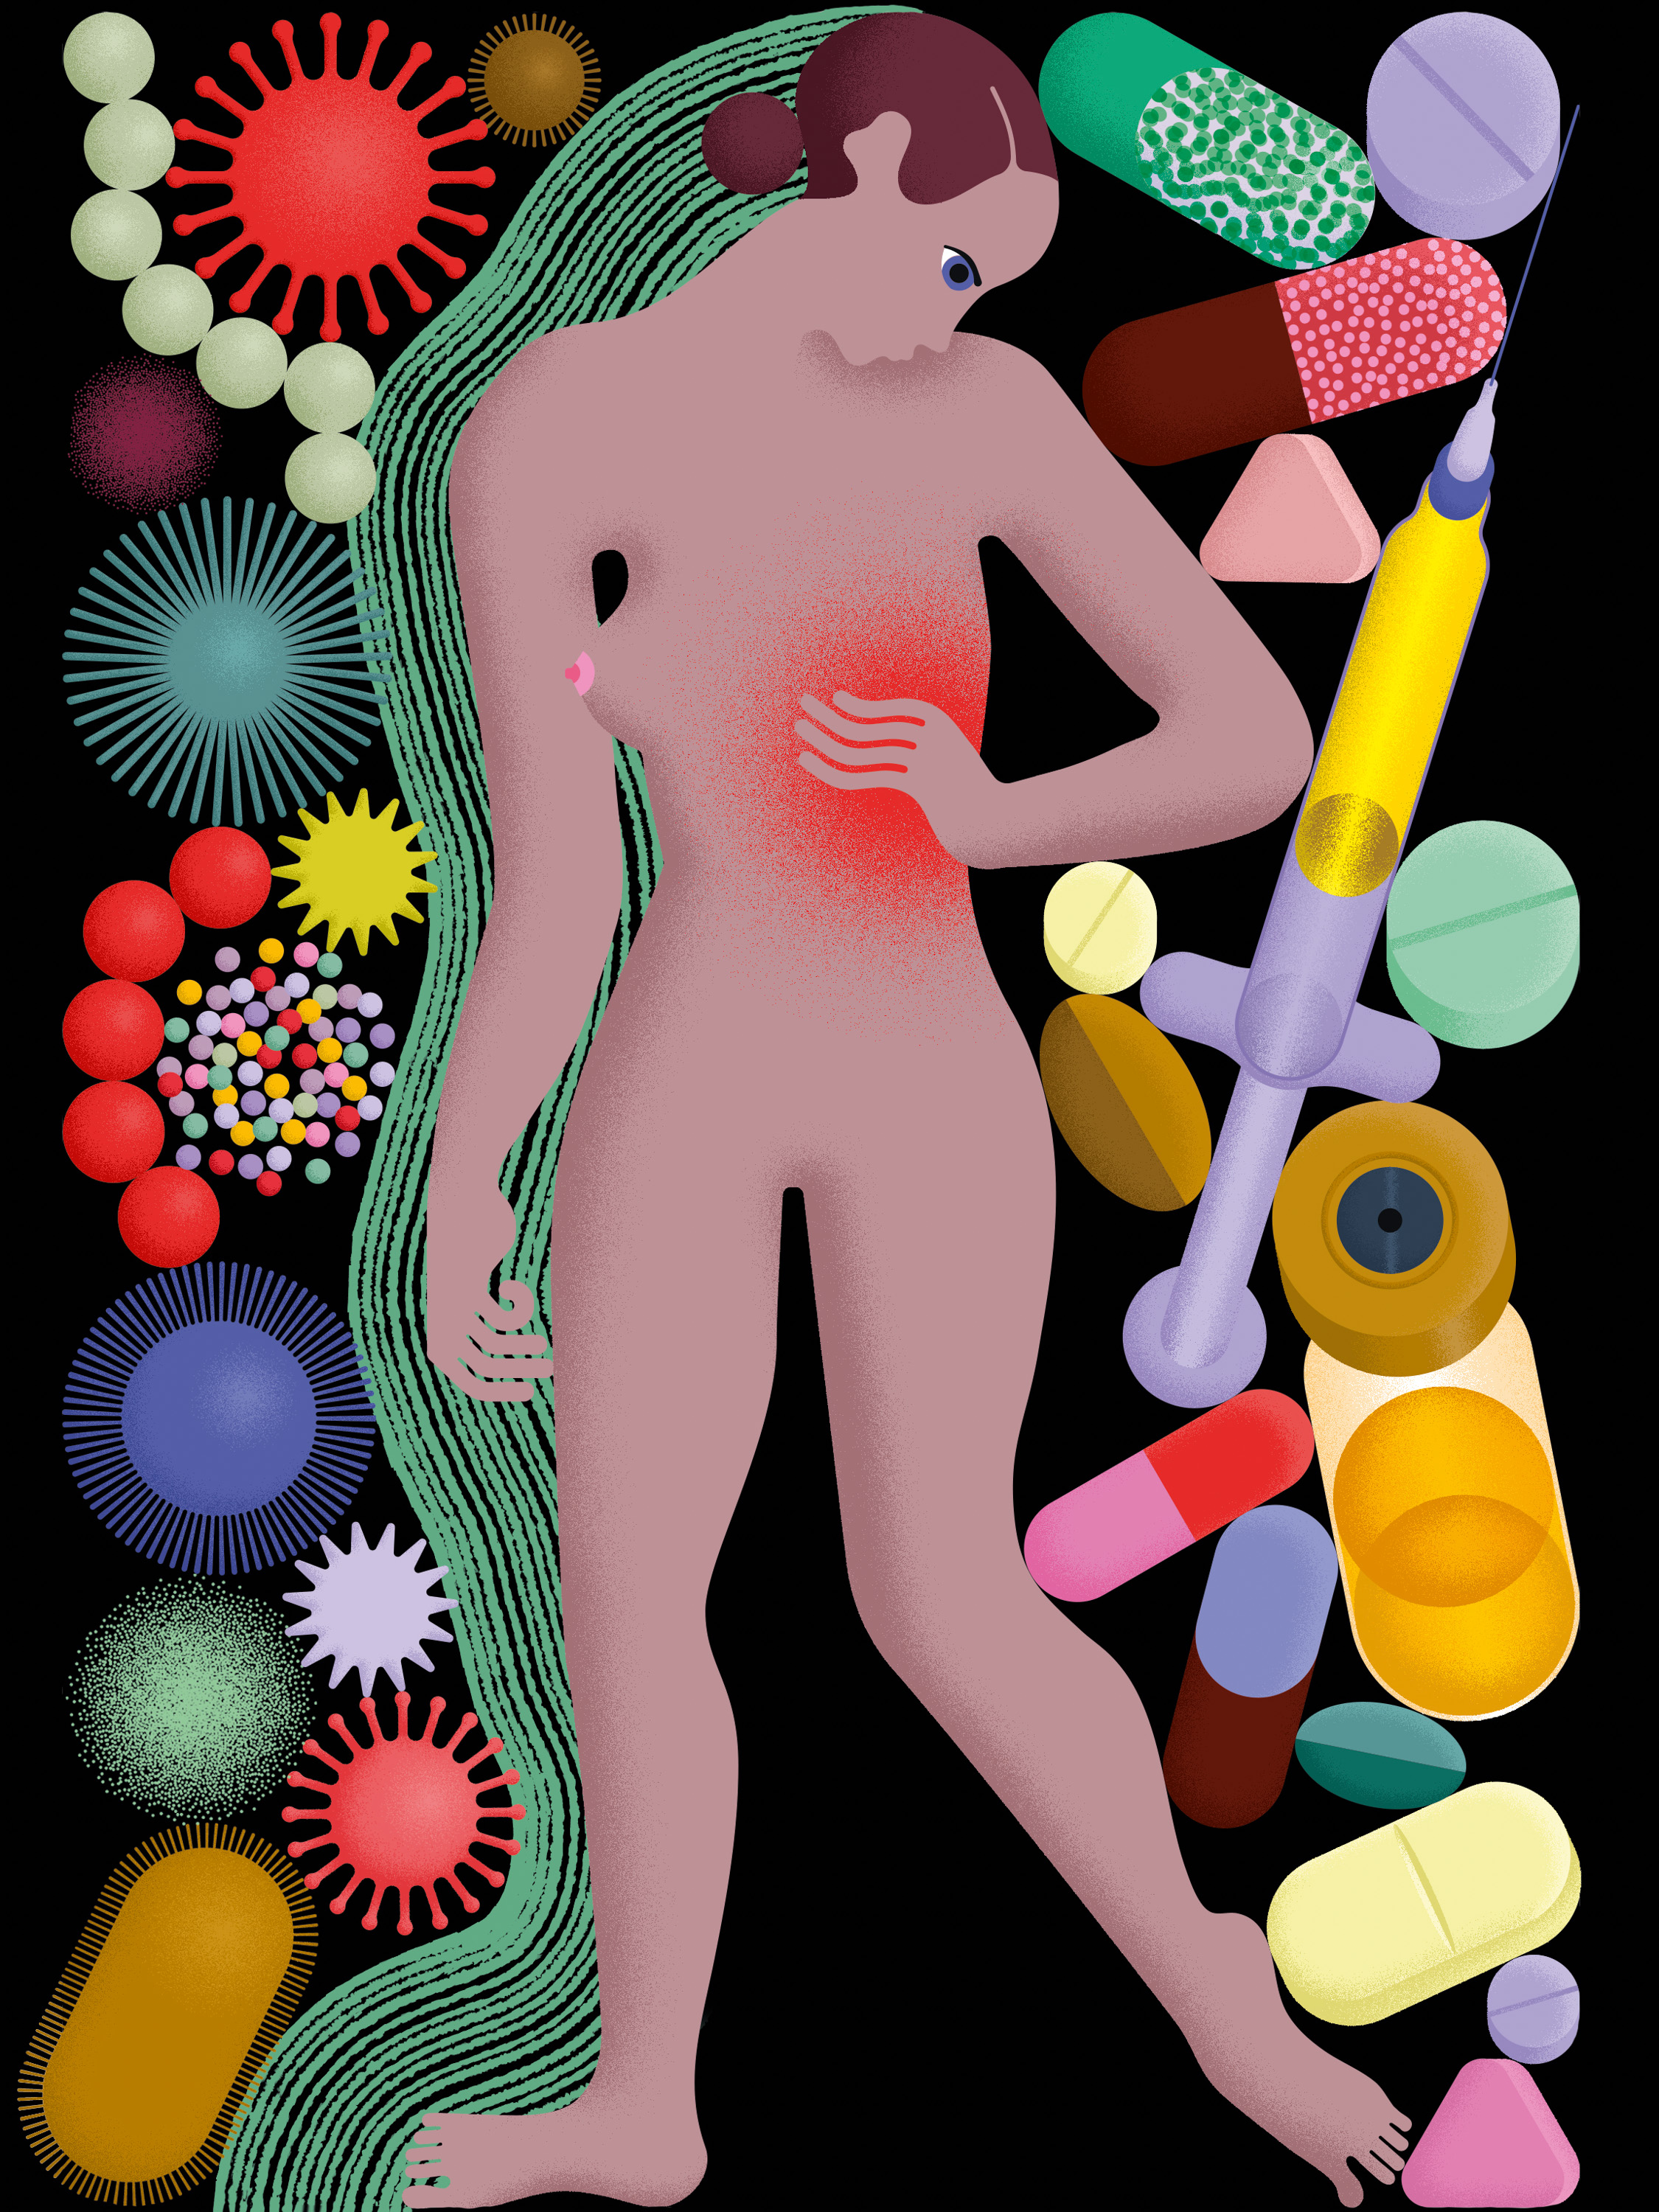 immunity concept illustration